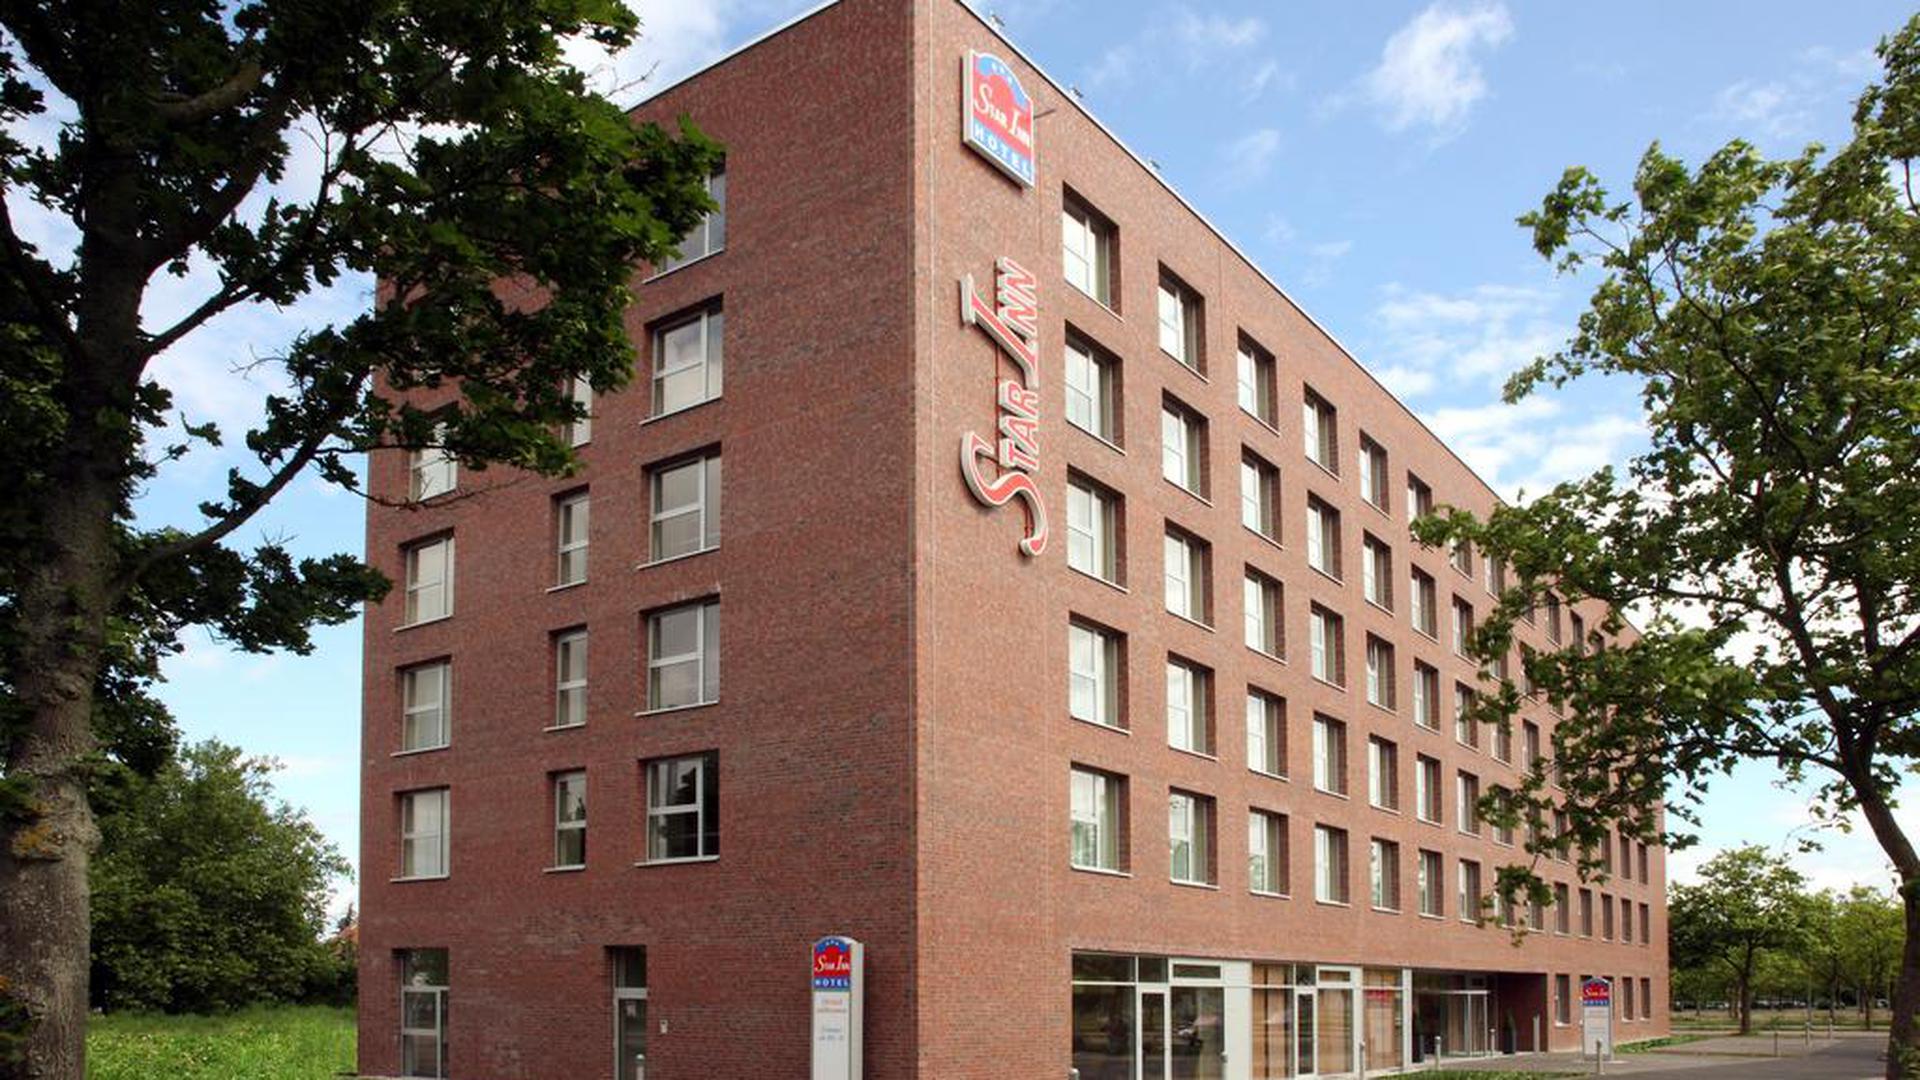 Star Inn Hotel Karlsruhe